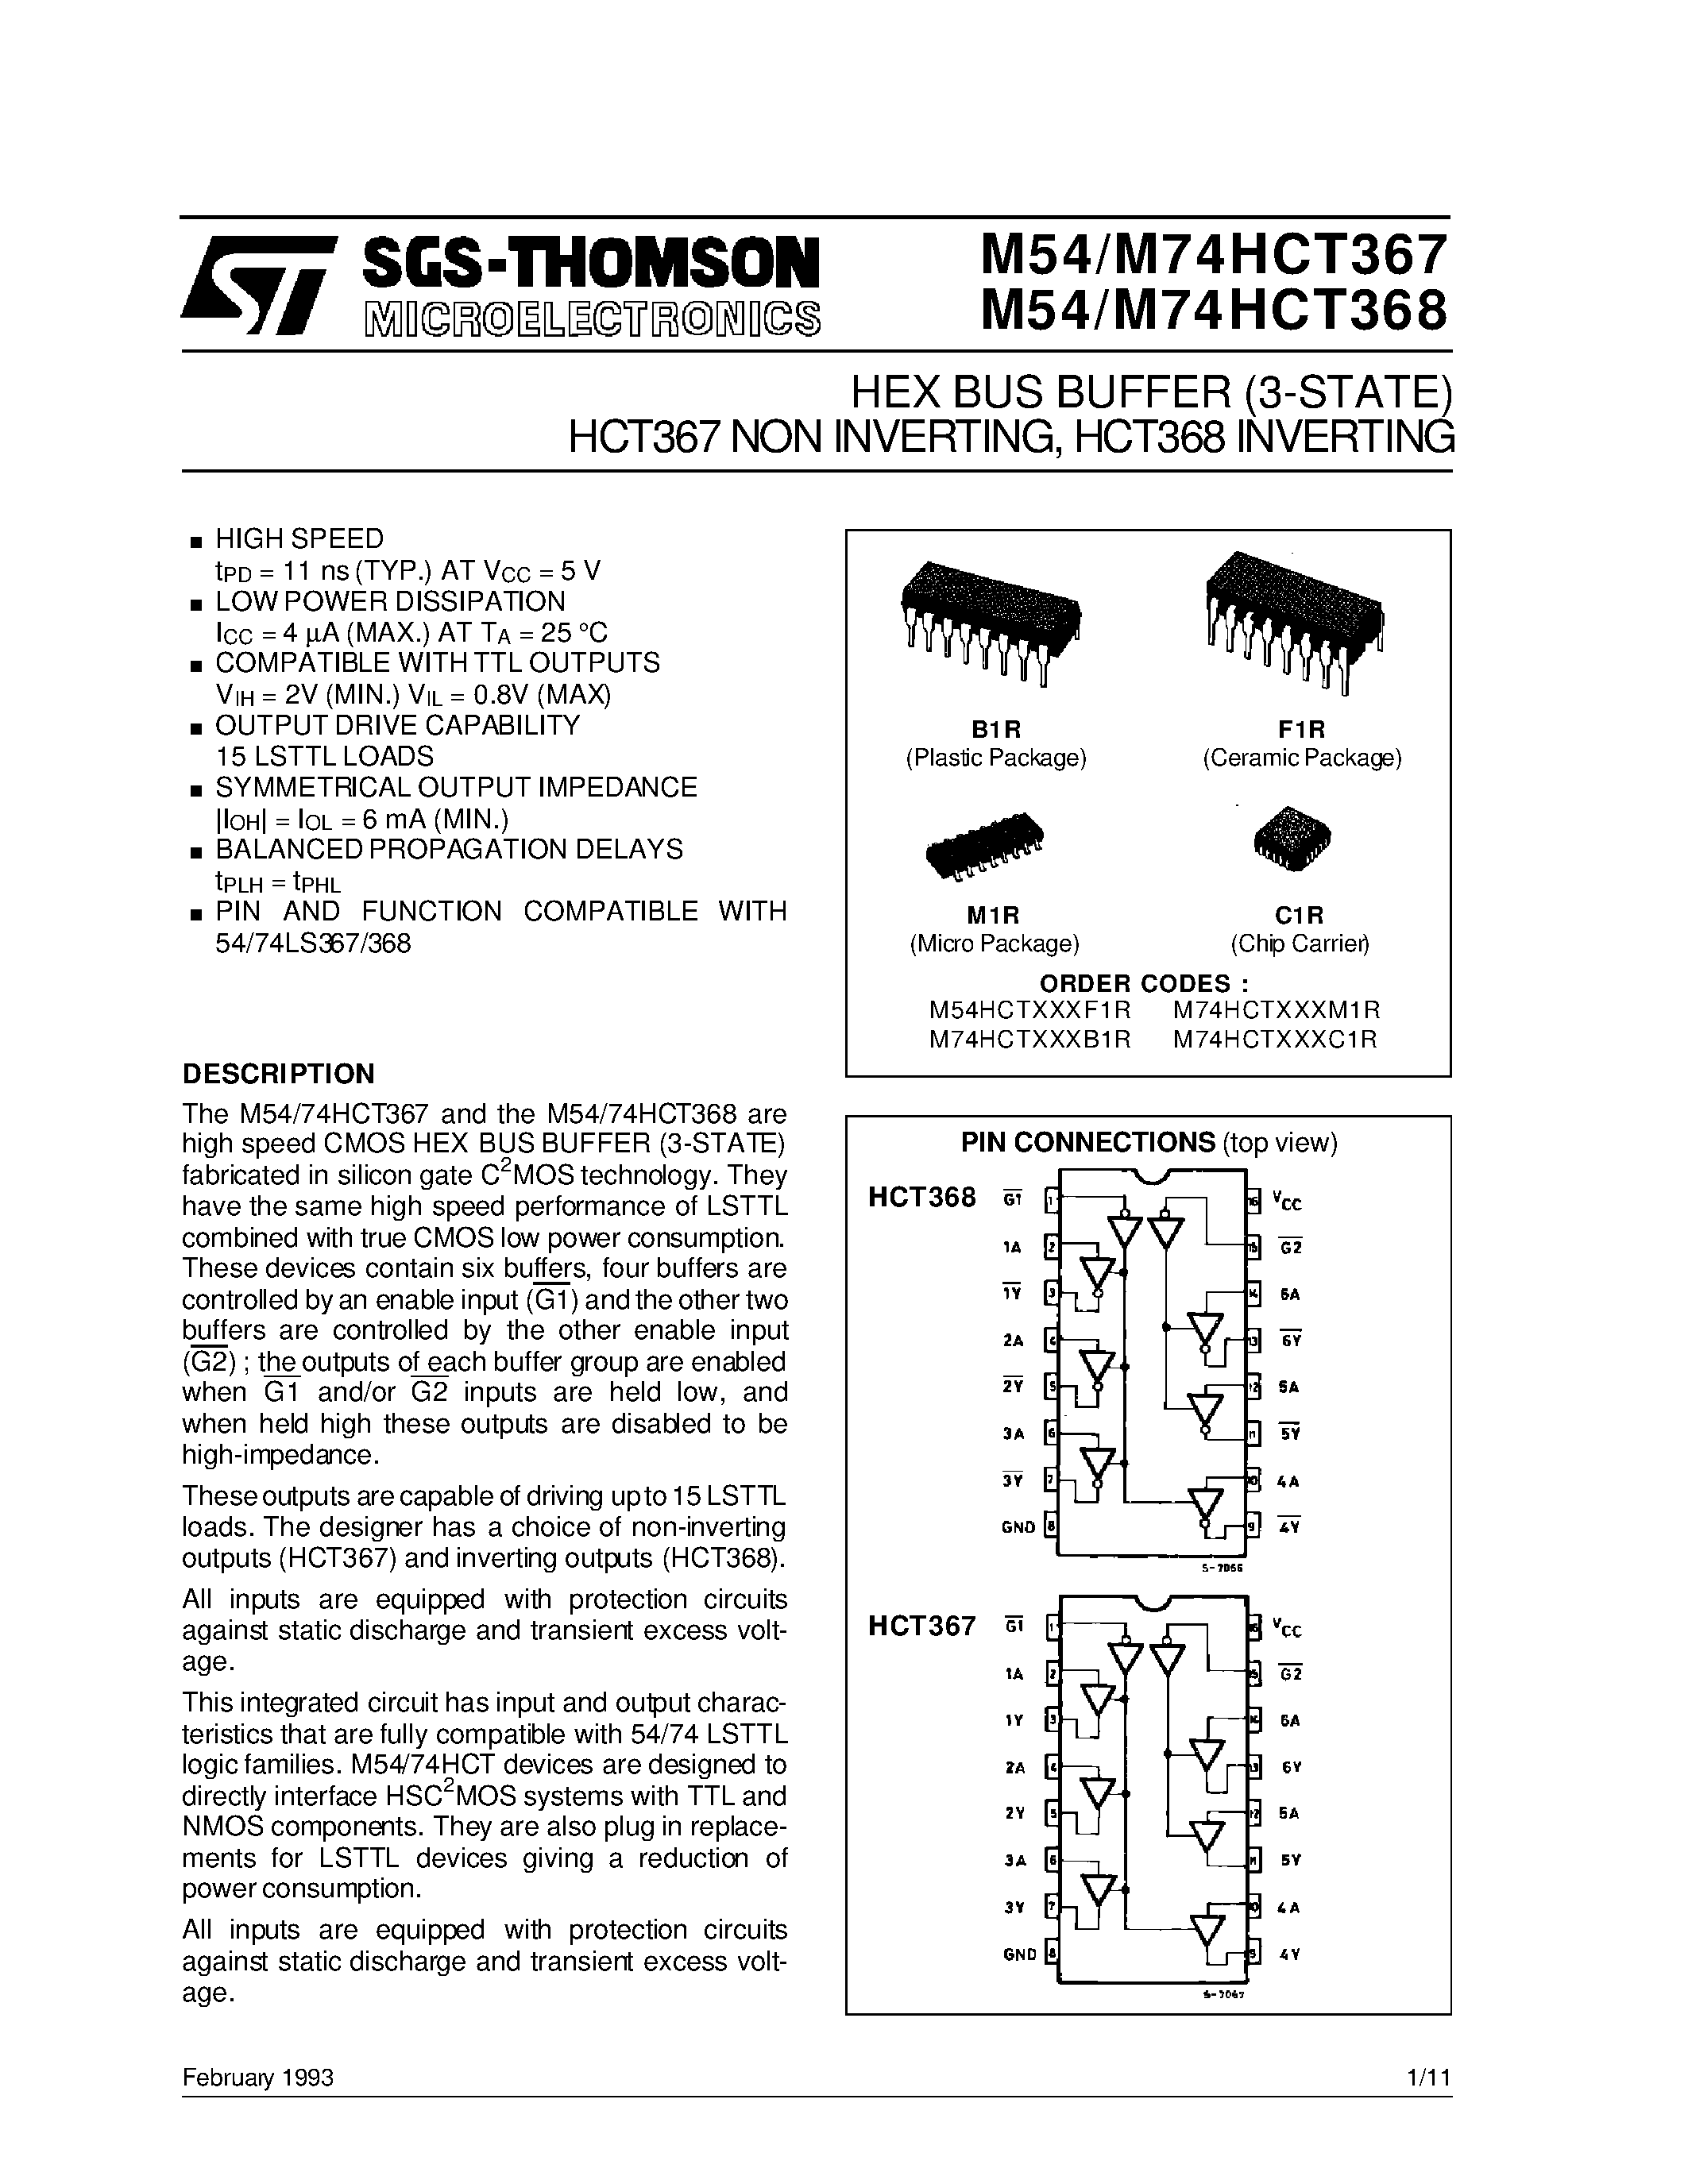 Datasheet M74HCT368 - HEX BUS BUFFER 3-STATE HCT367 NONINVERTING / HCT368 INVERTING page 1